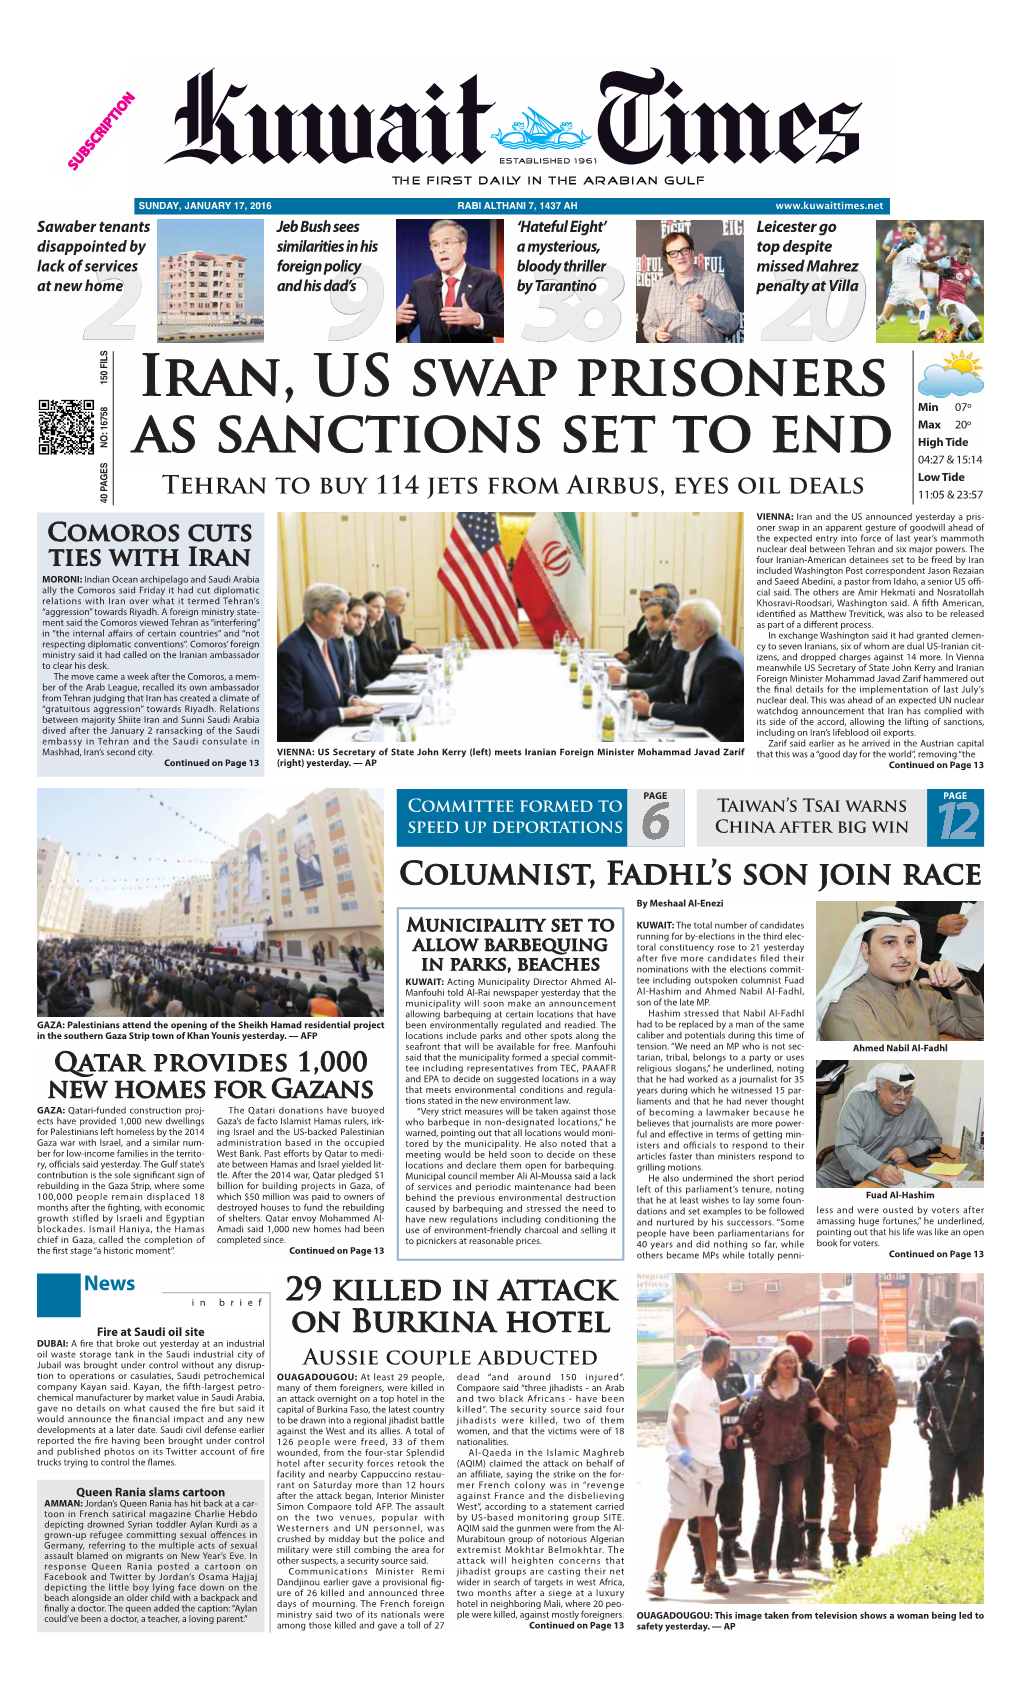 Iran, US Swap Prisoners As Sanctions Set To